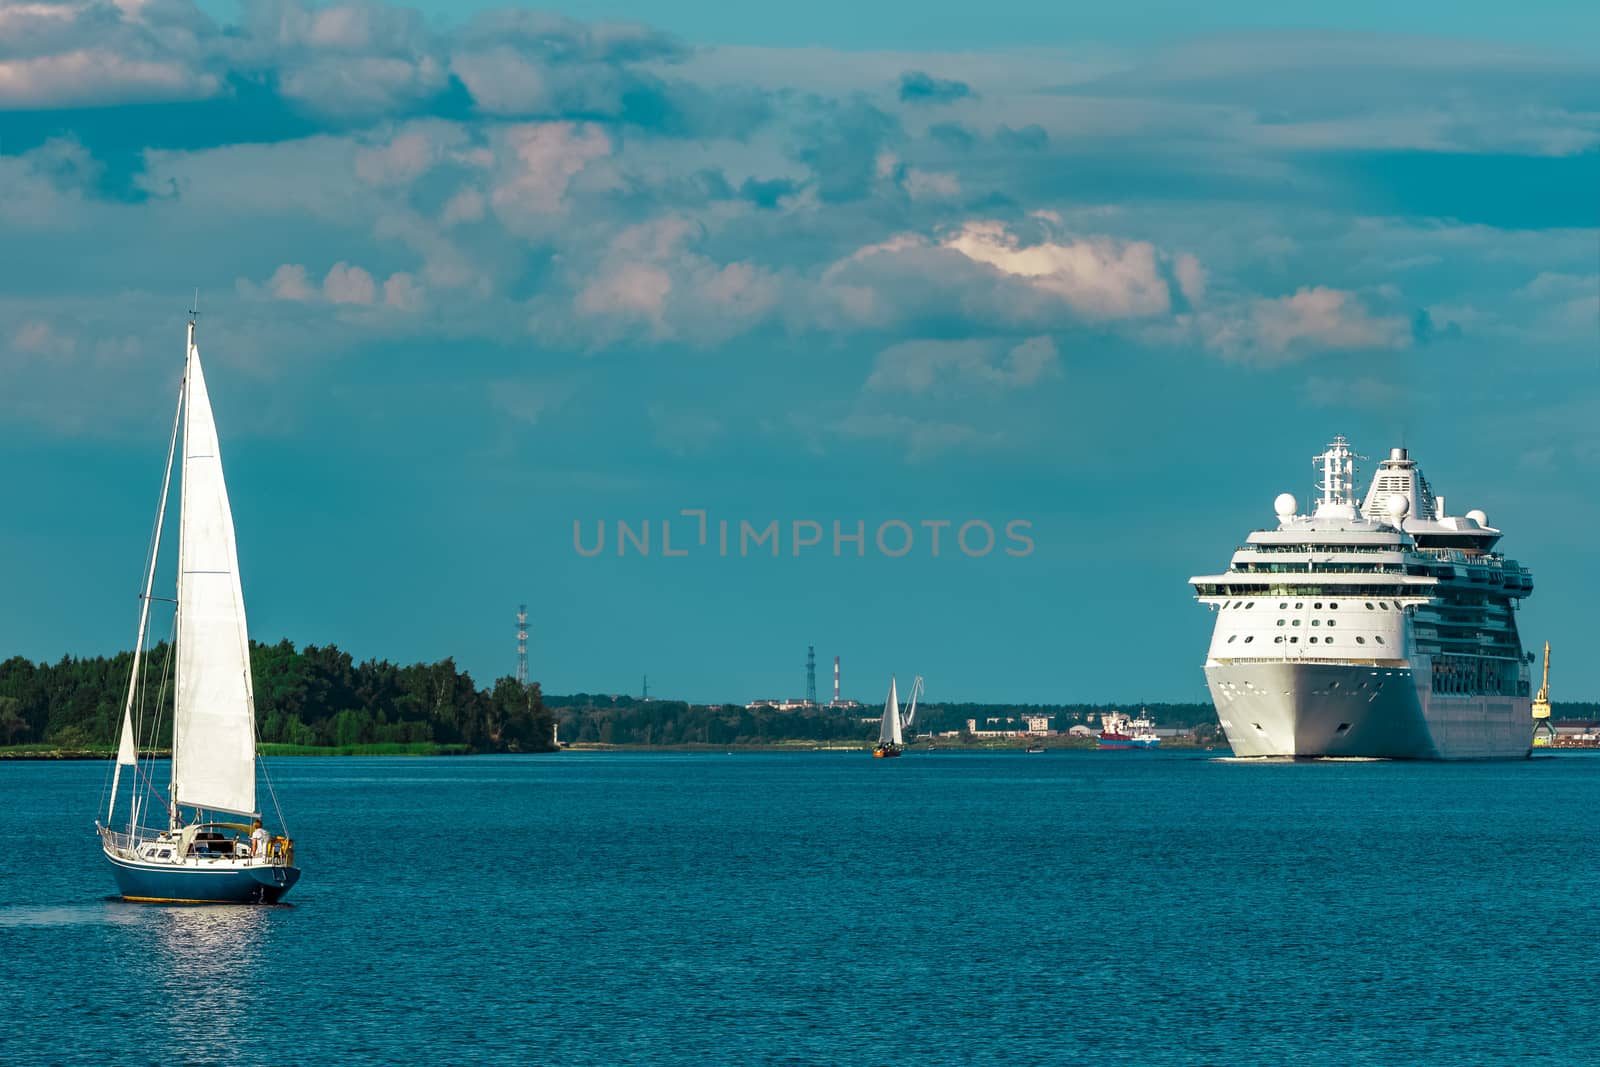 Luxury cruise liner in travel by sengnsp